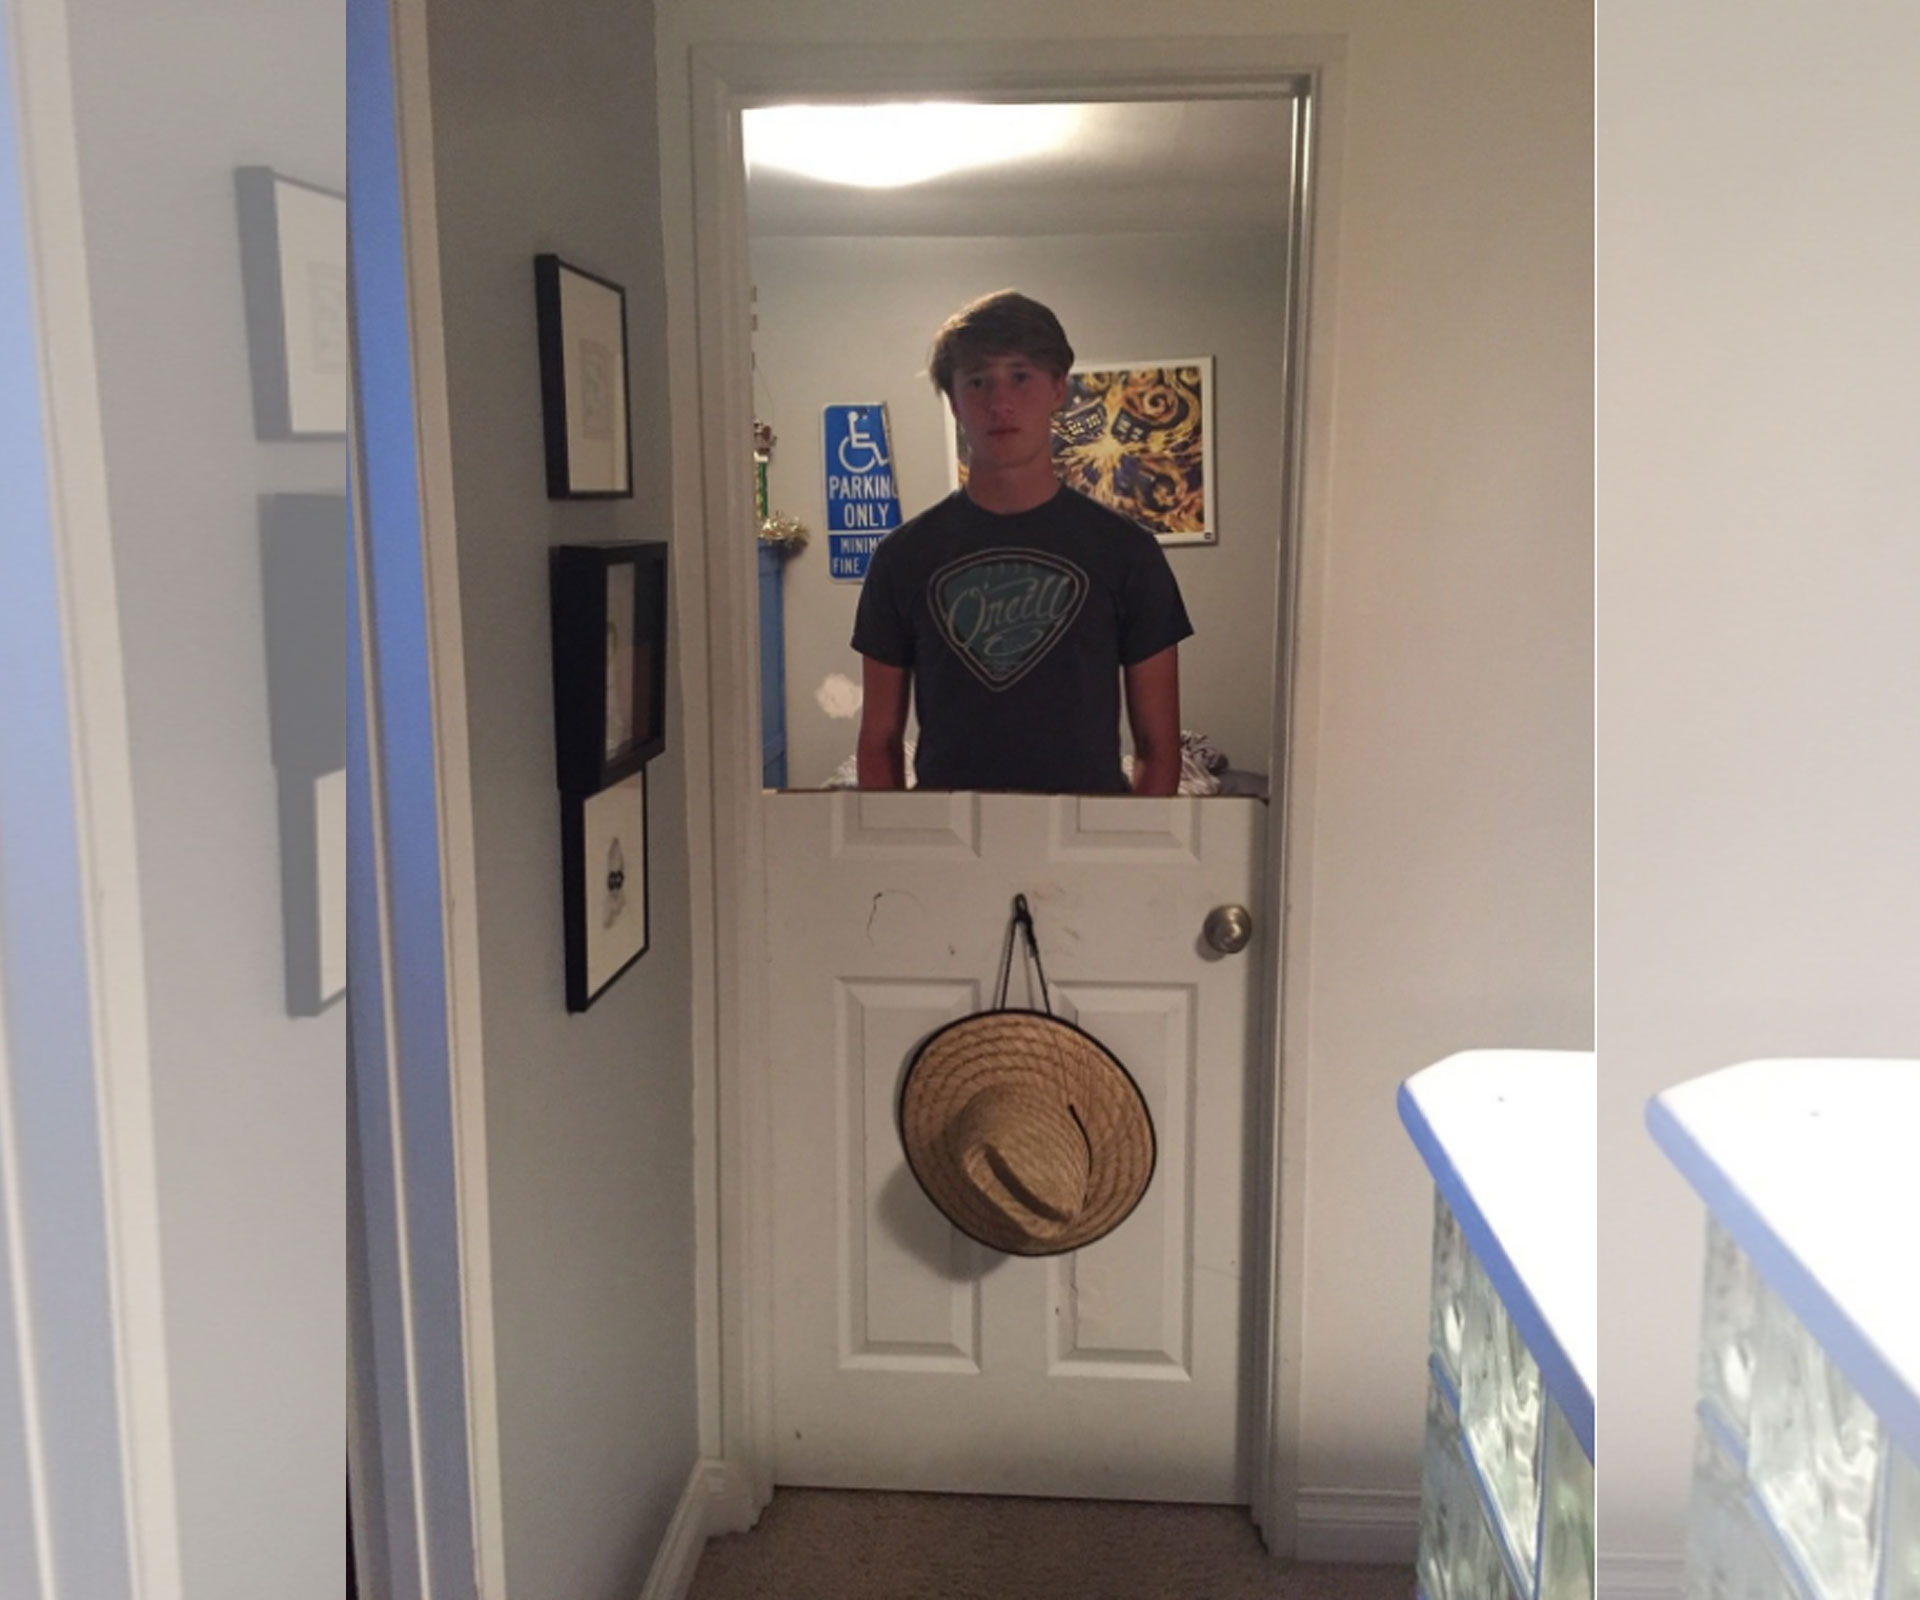 Parents find an ingenious way to punish this door-slamming teenager